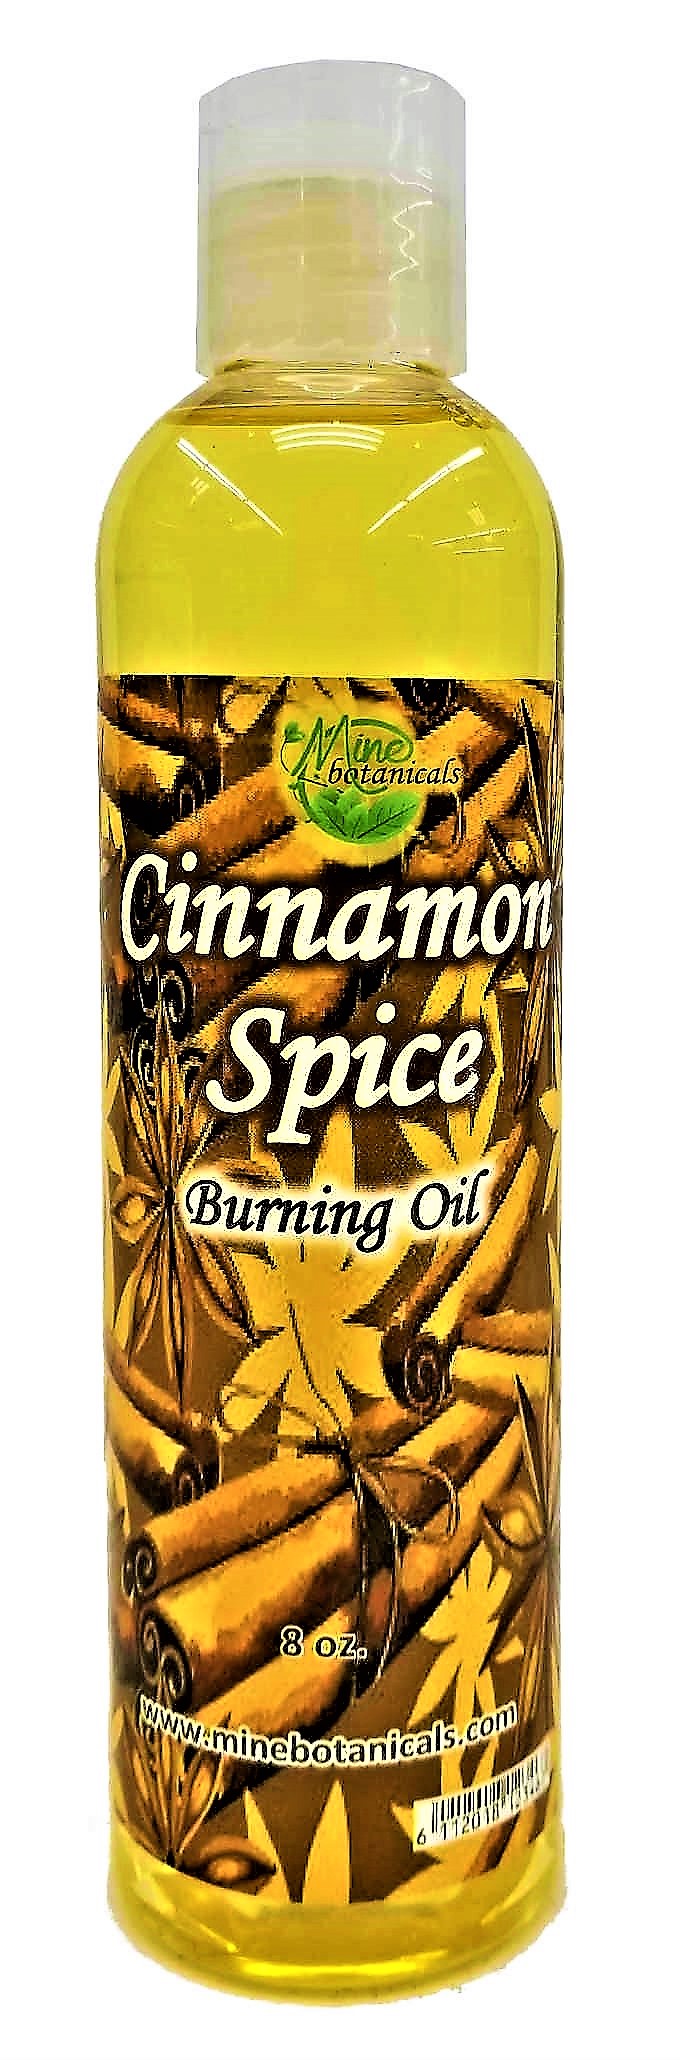 Cinnamon Spice Burning Oil